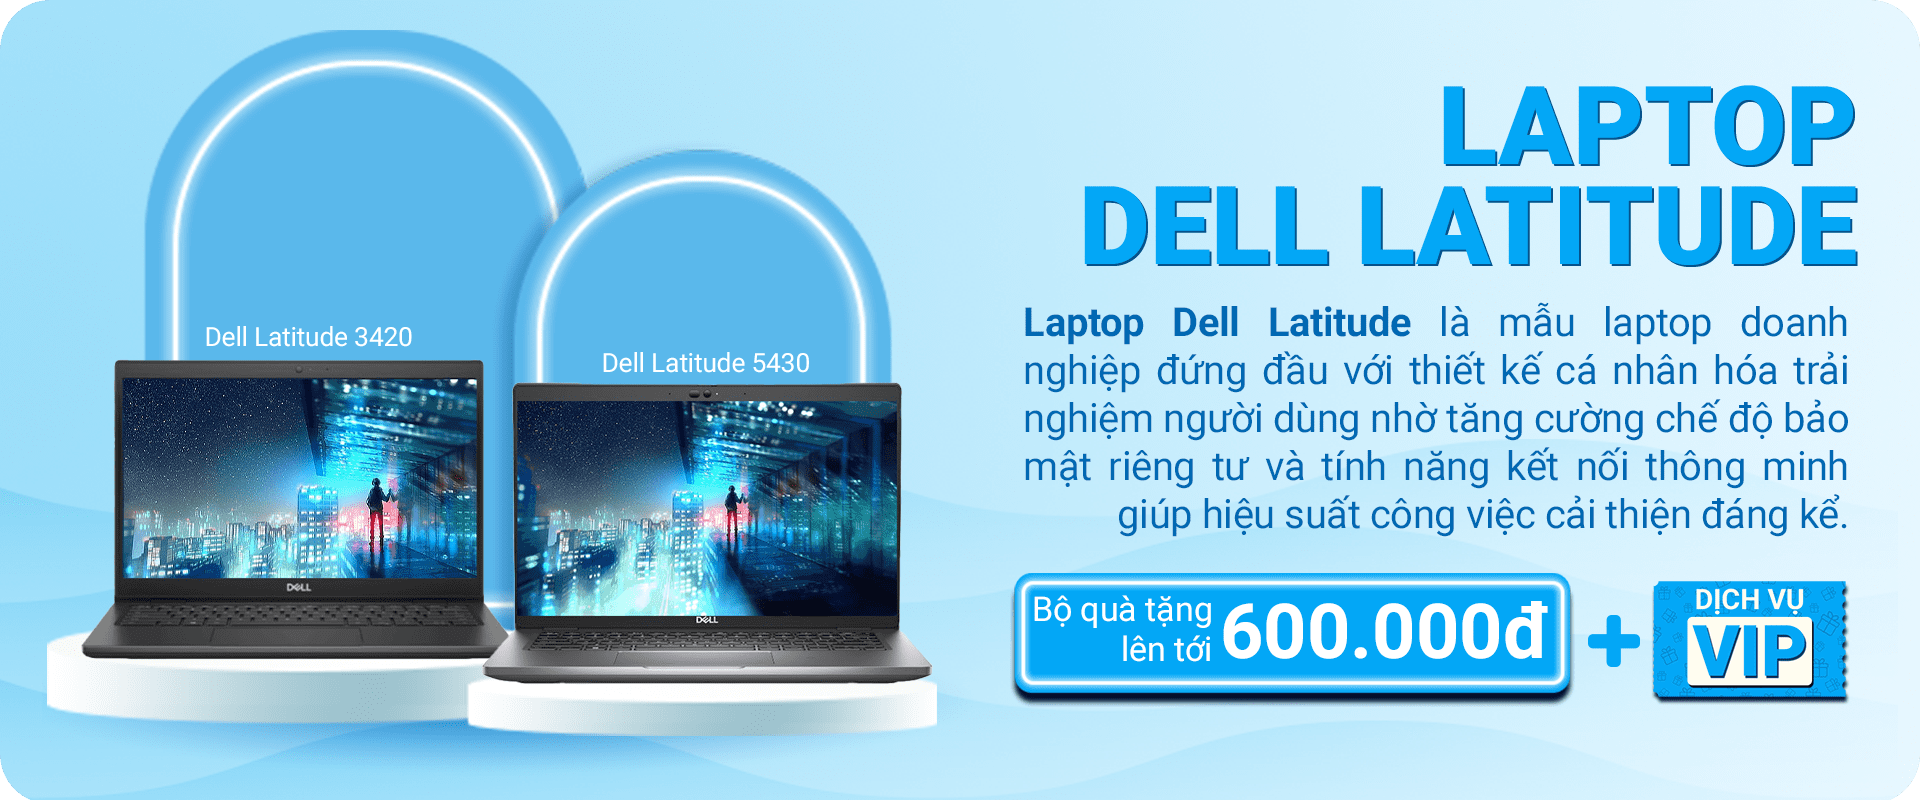 Laptop Dell Latitude nhom3 5